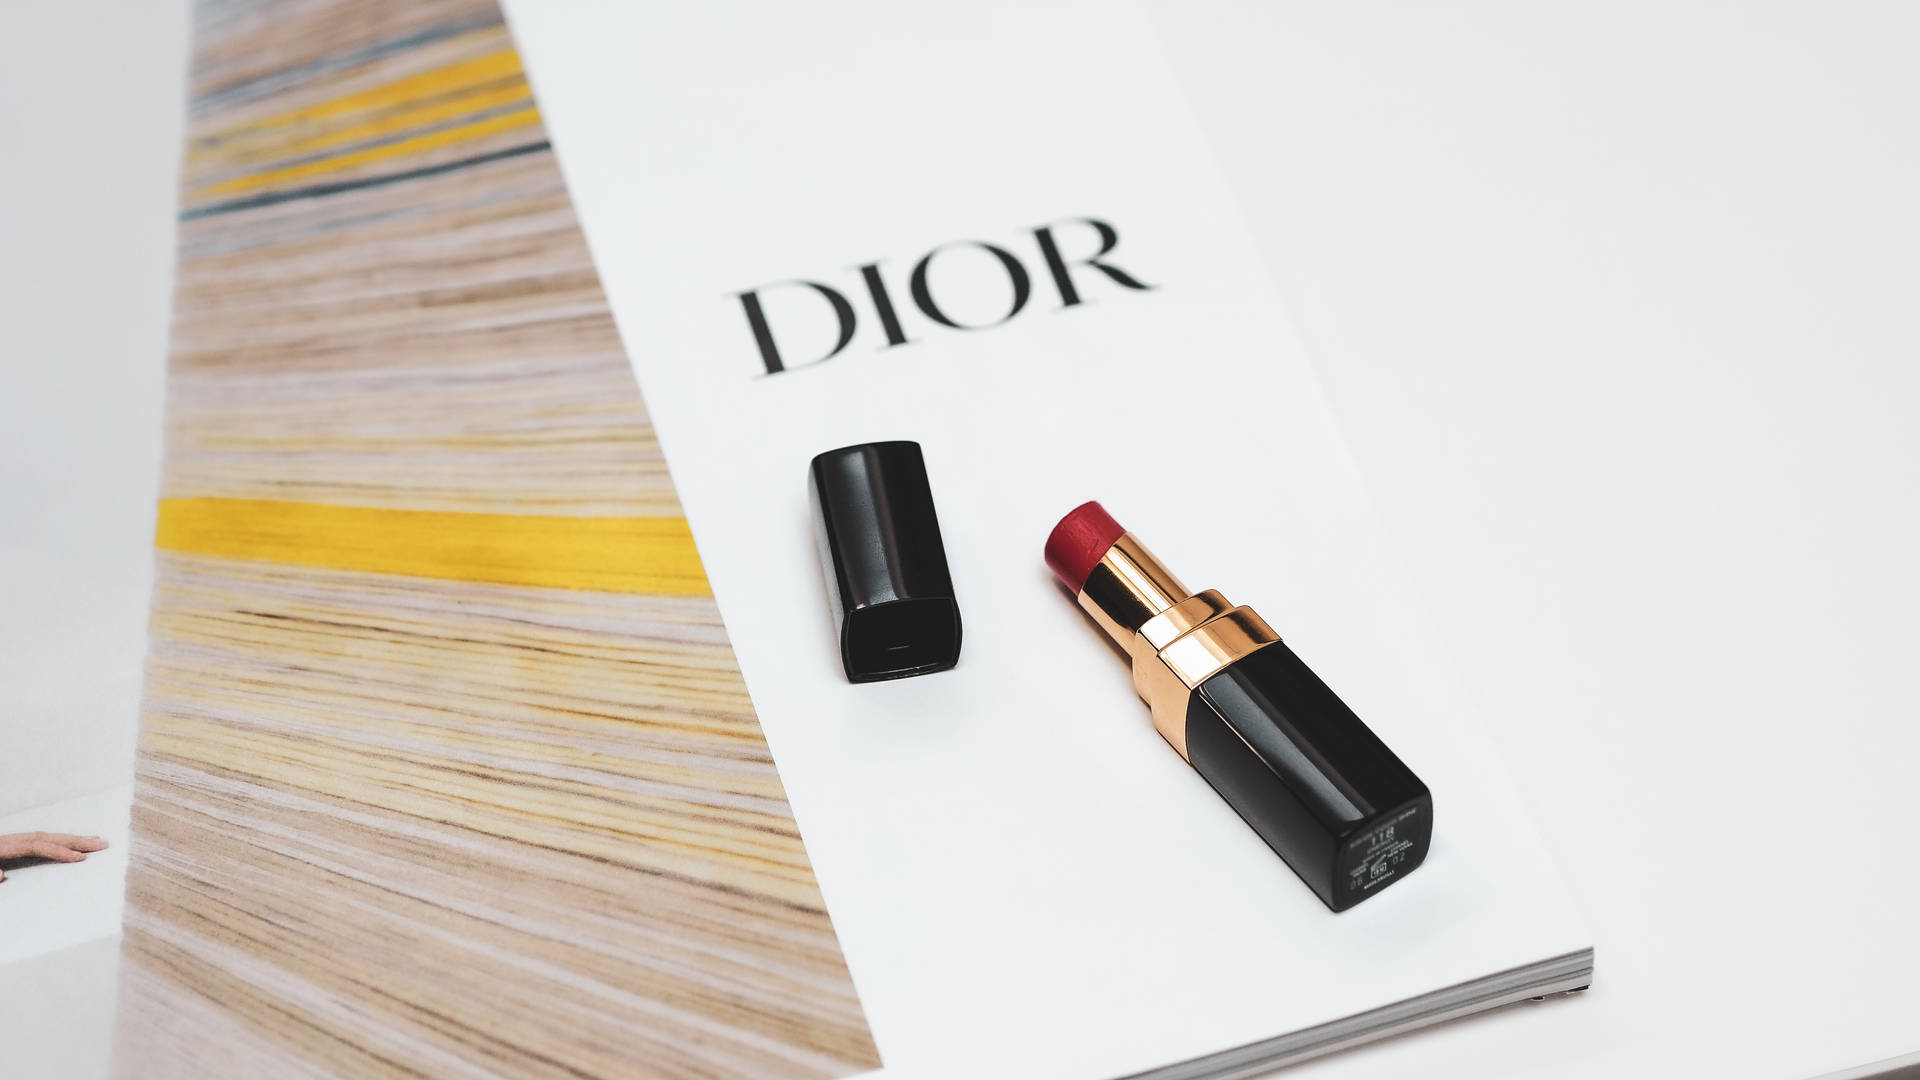 Dior Magazine And Lipstick Background